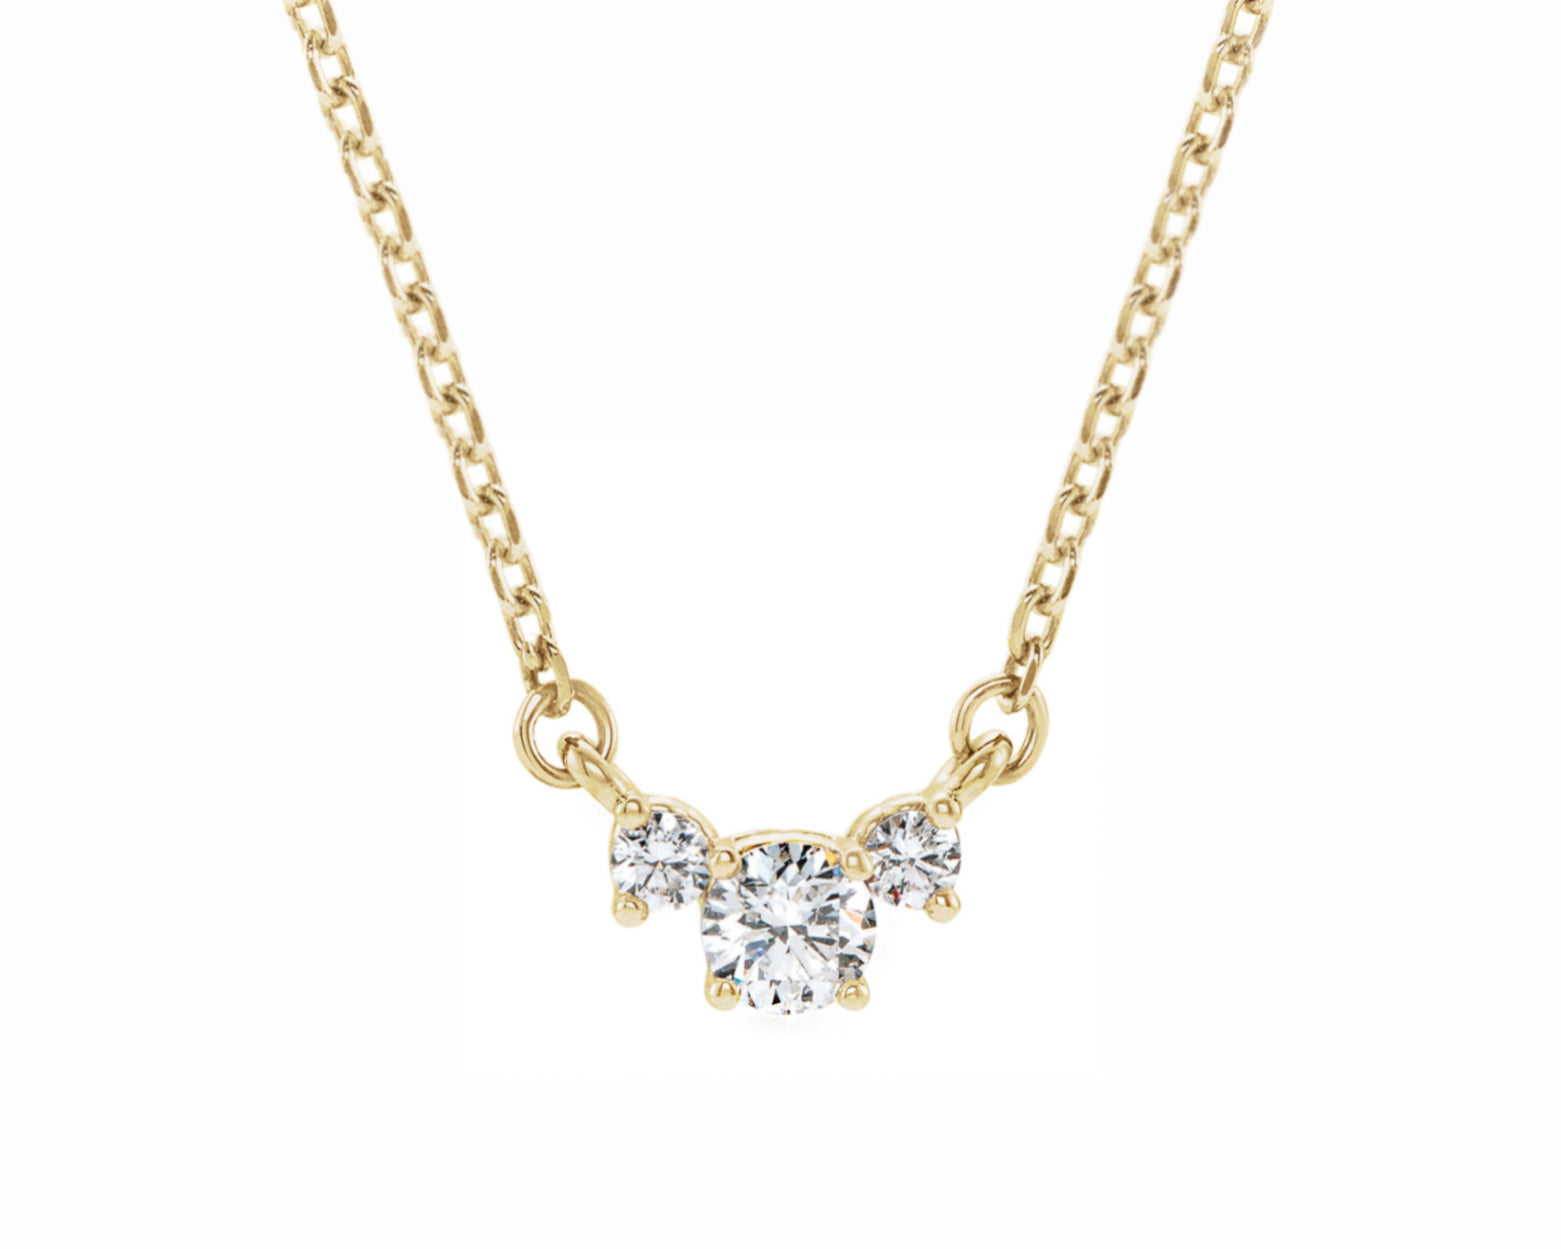 three stone diamond pendant solid gold necklace